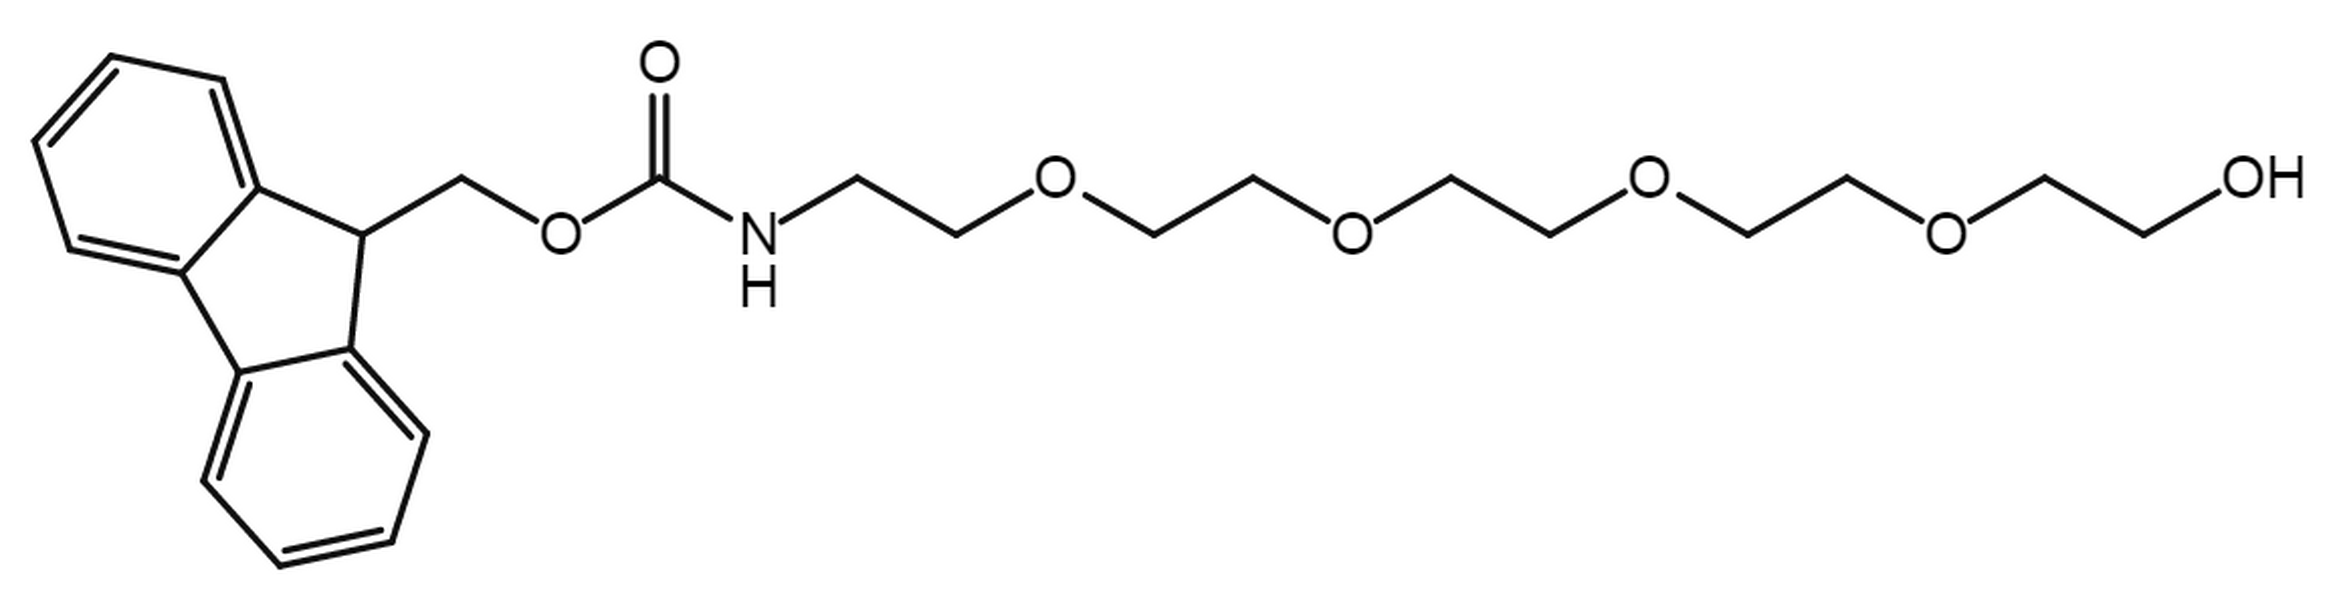 Fmoc-PEG5-alcohol